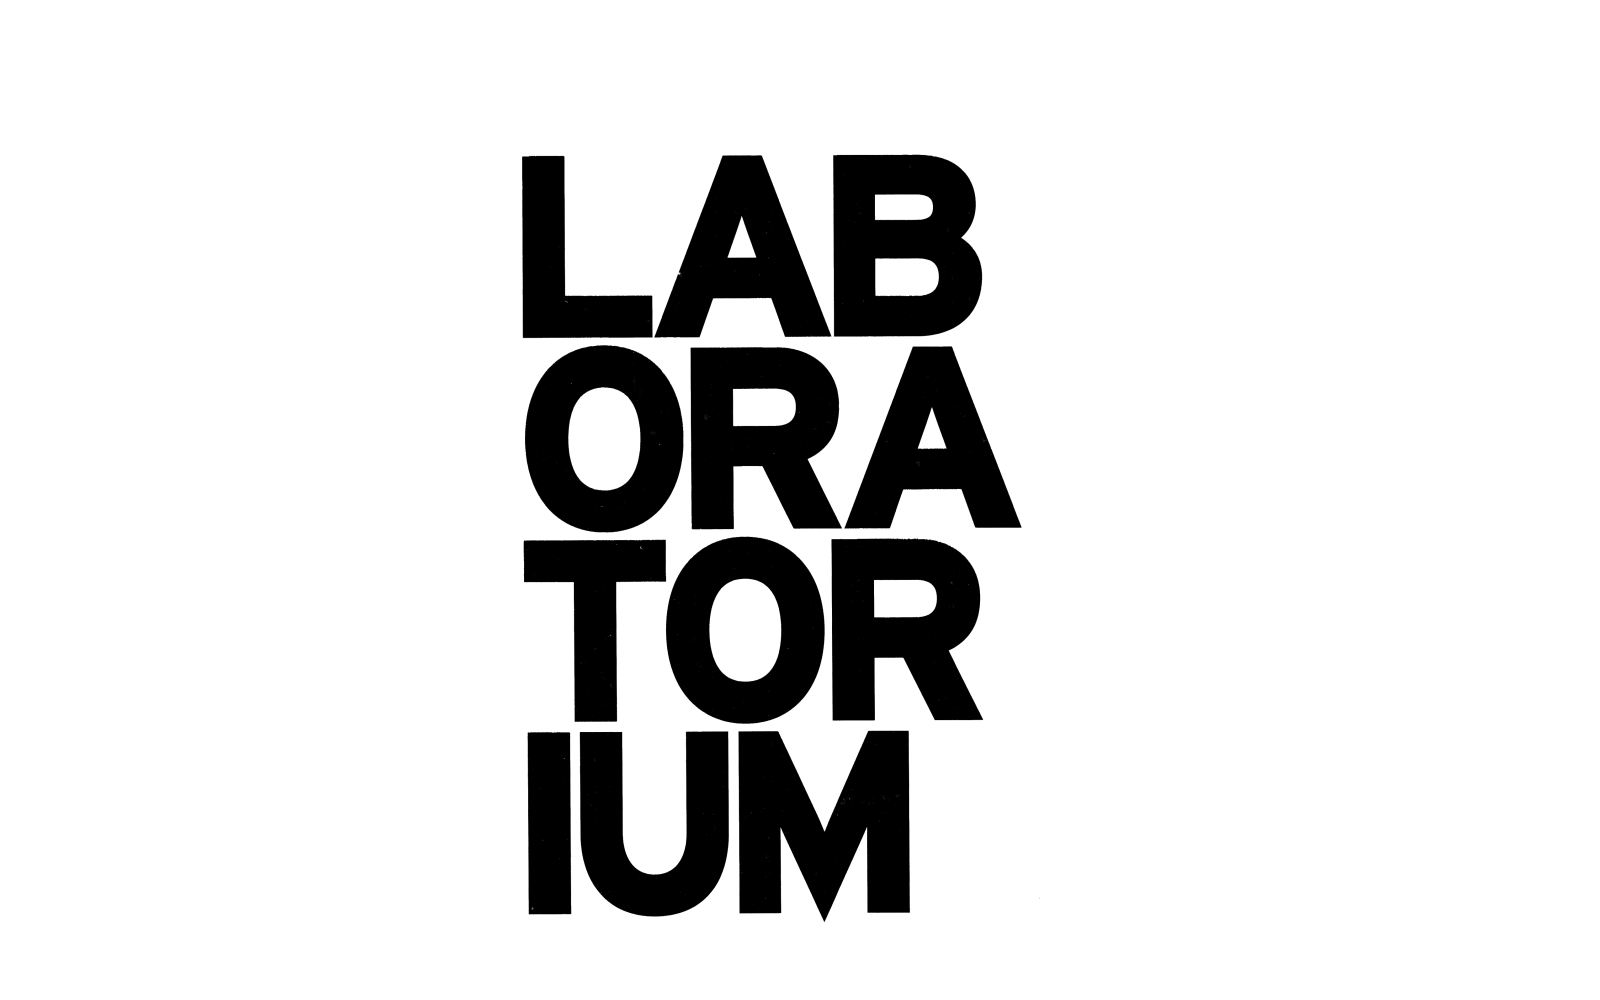 Black lettering on a white background: Laboratorium